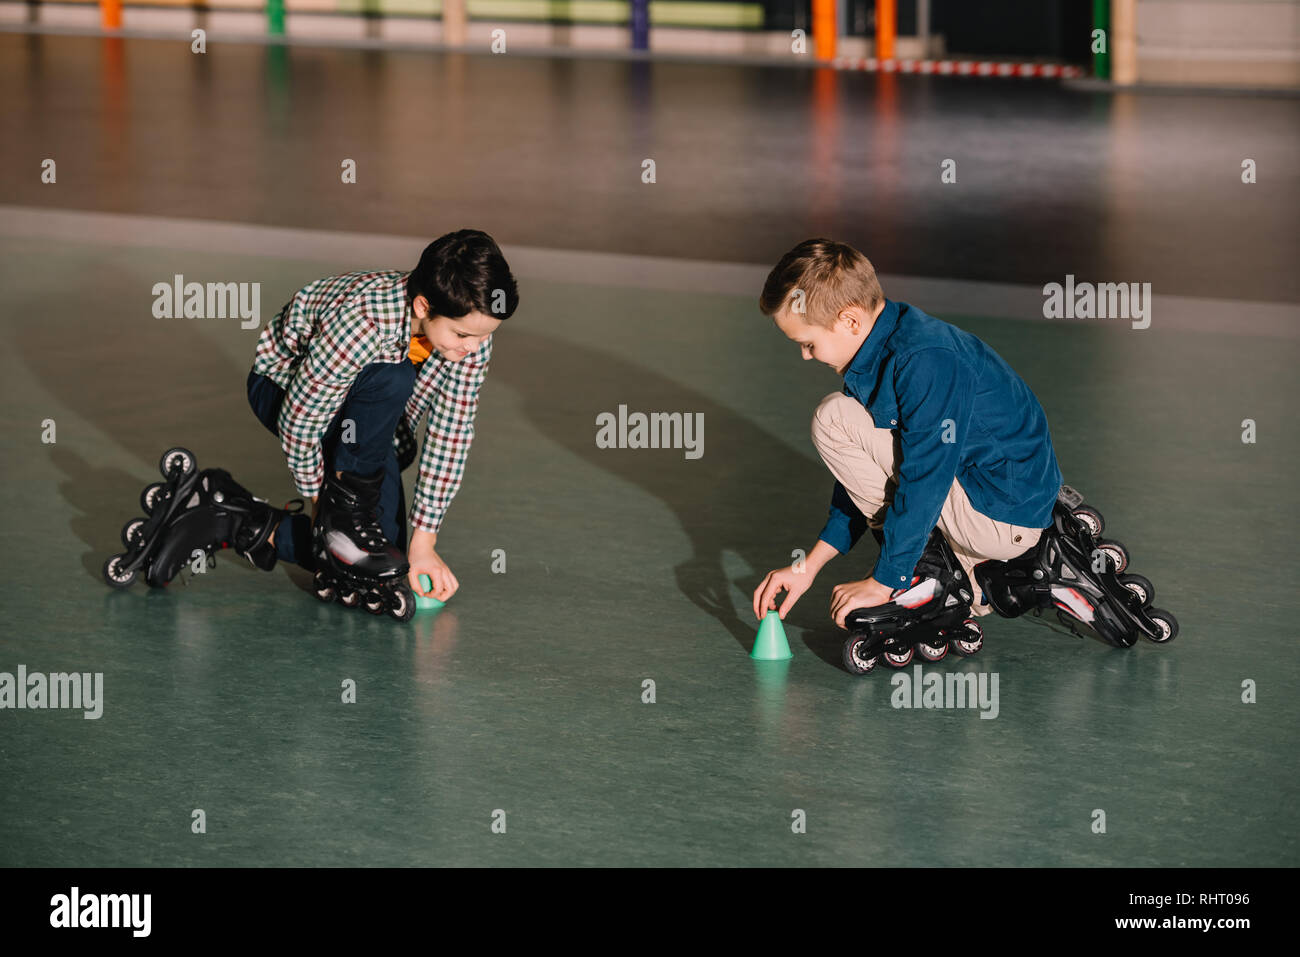 Roller kids in black skates training together in gym Stock Photo